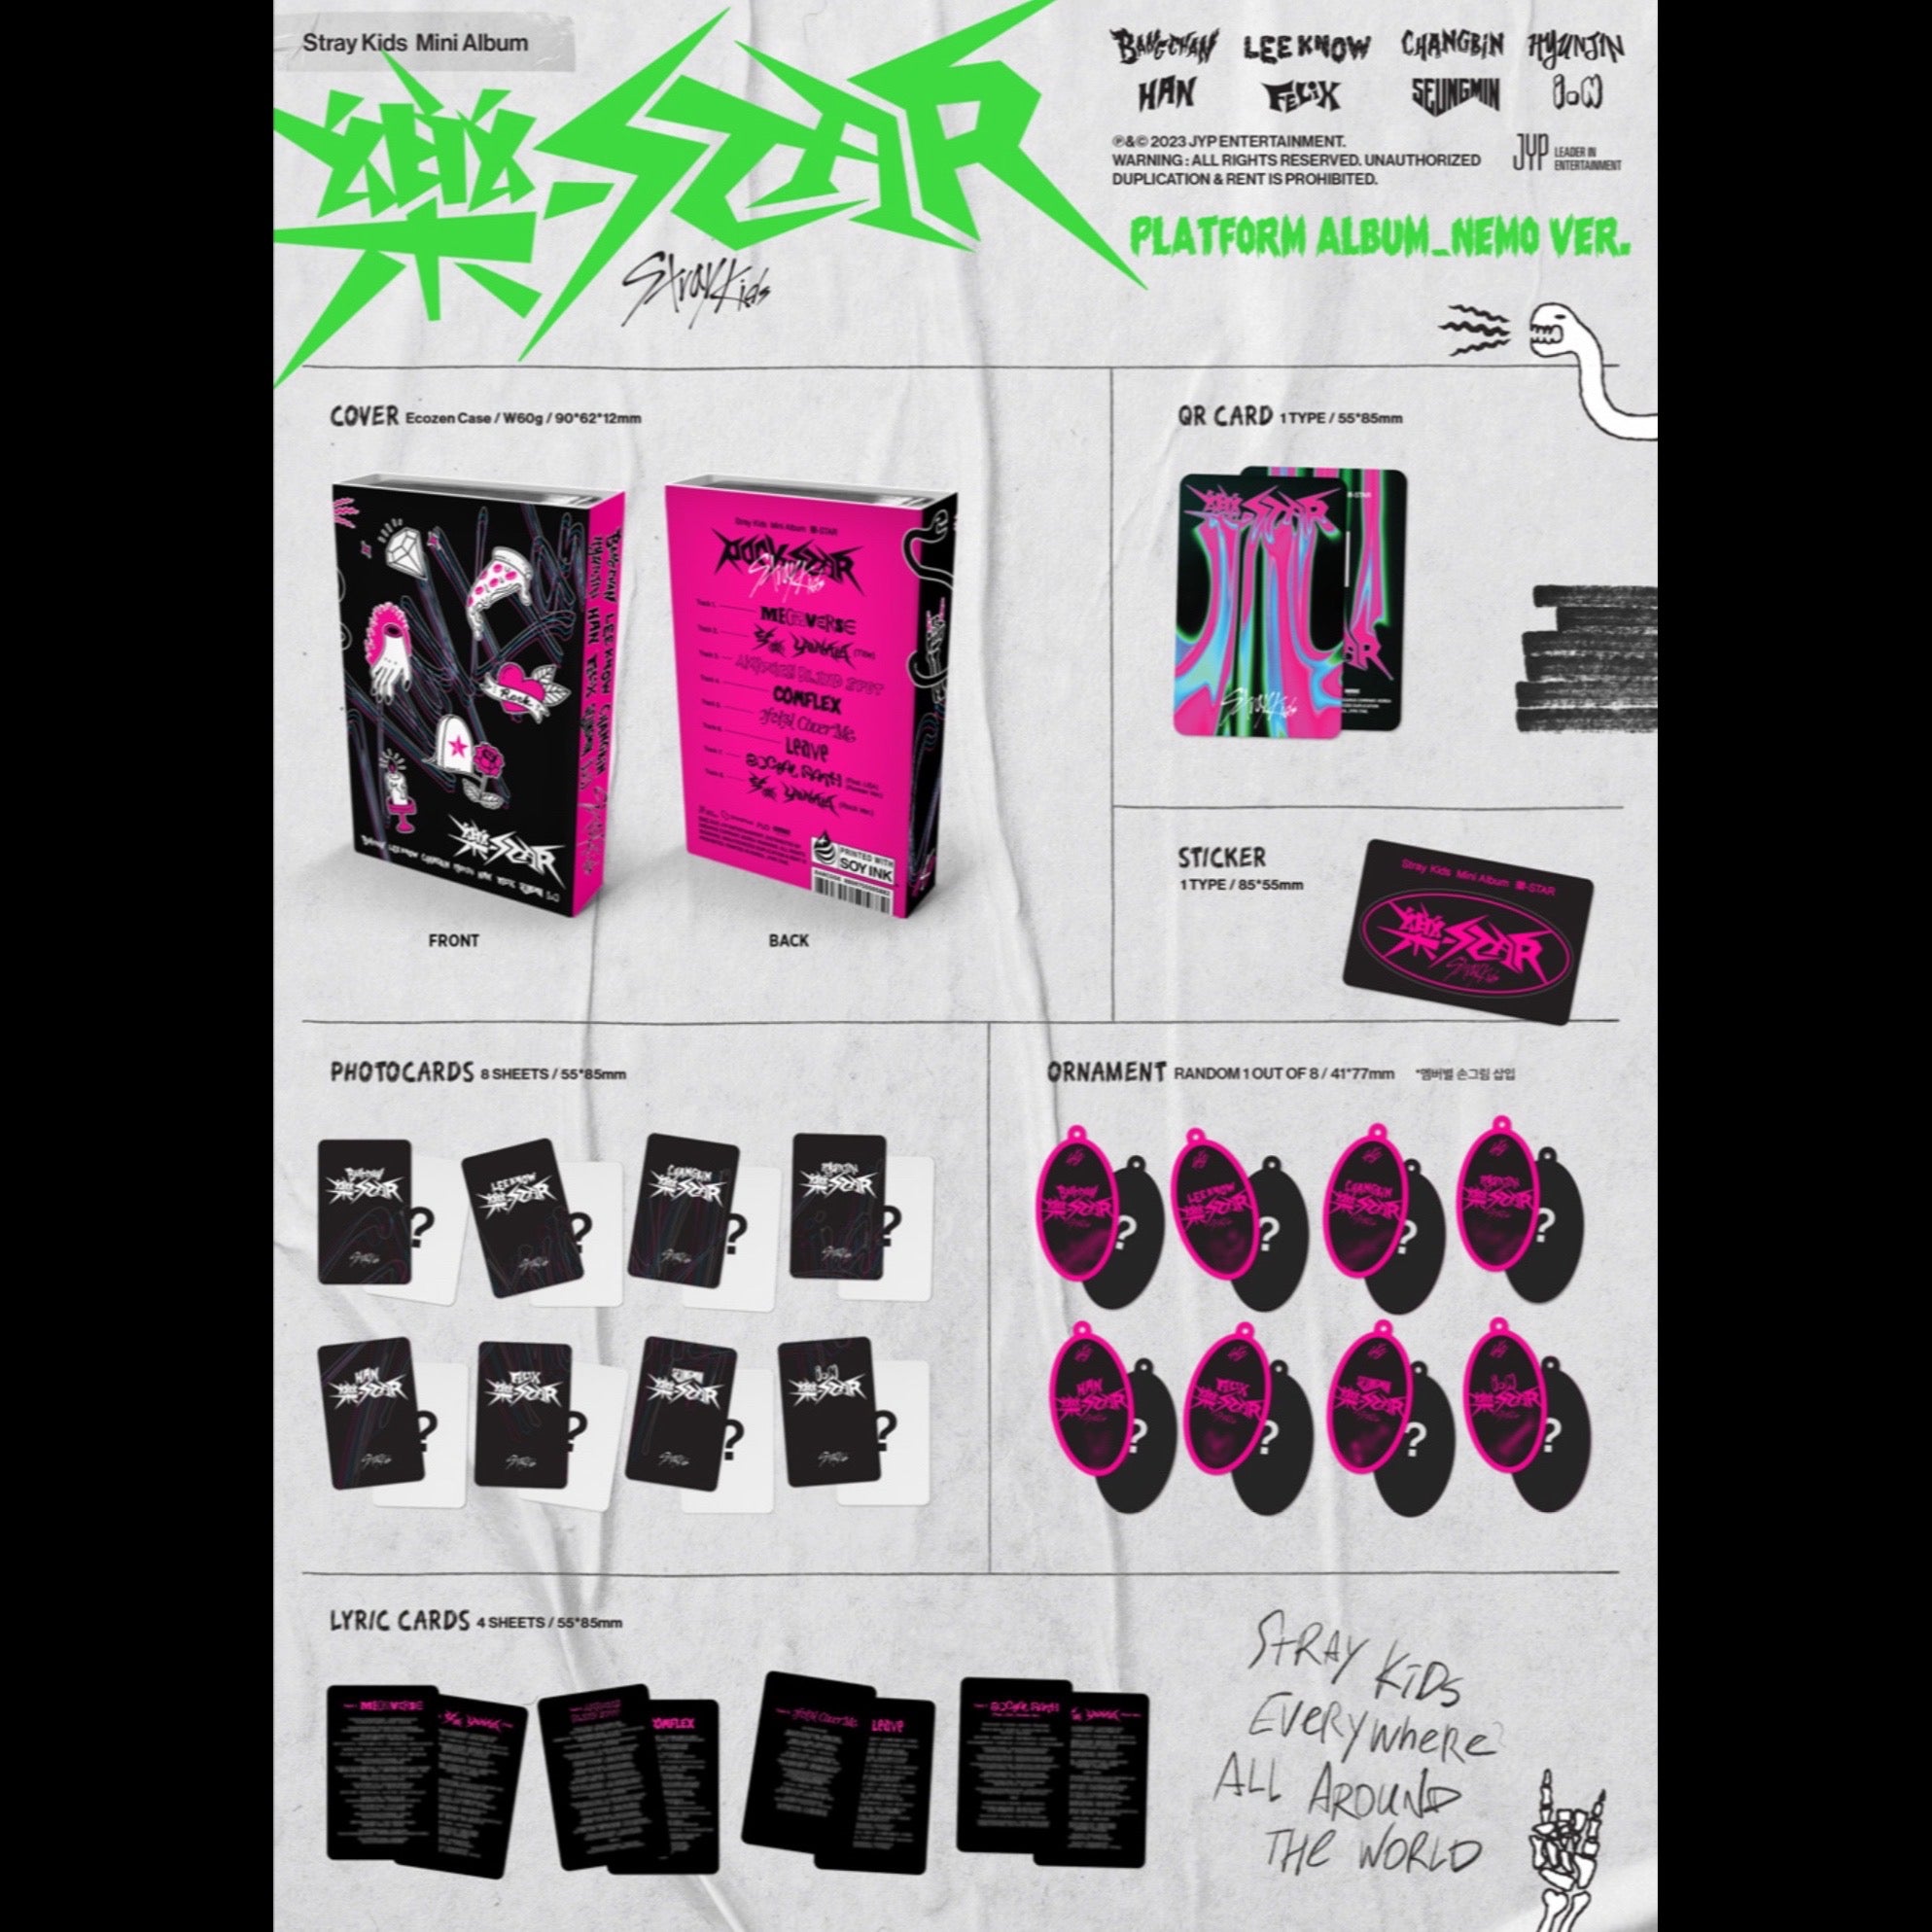 ROCK-STAR (ROCK VER.) – Stray Kids 스트레이 키즈 Official Store